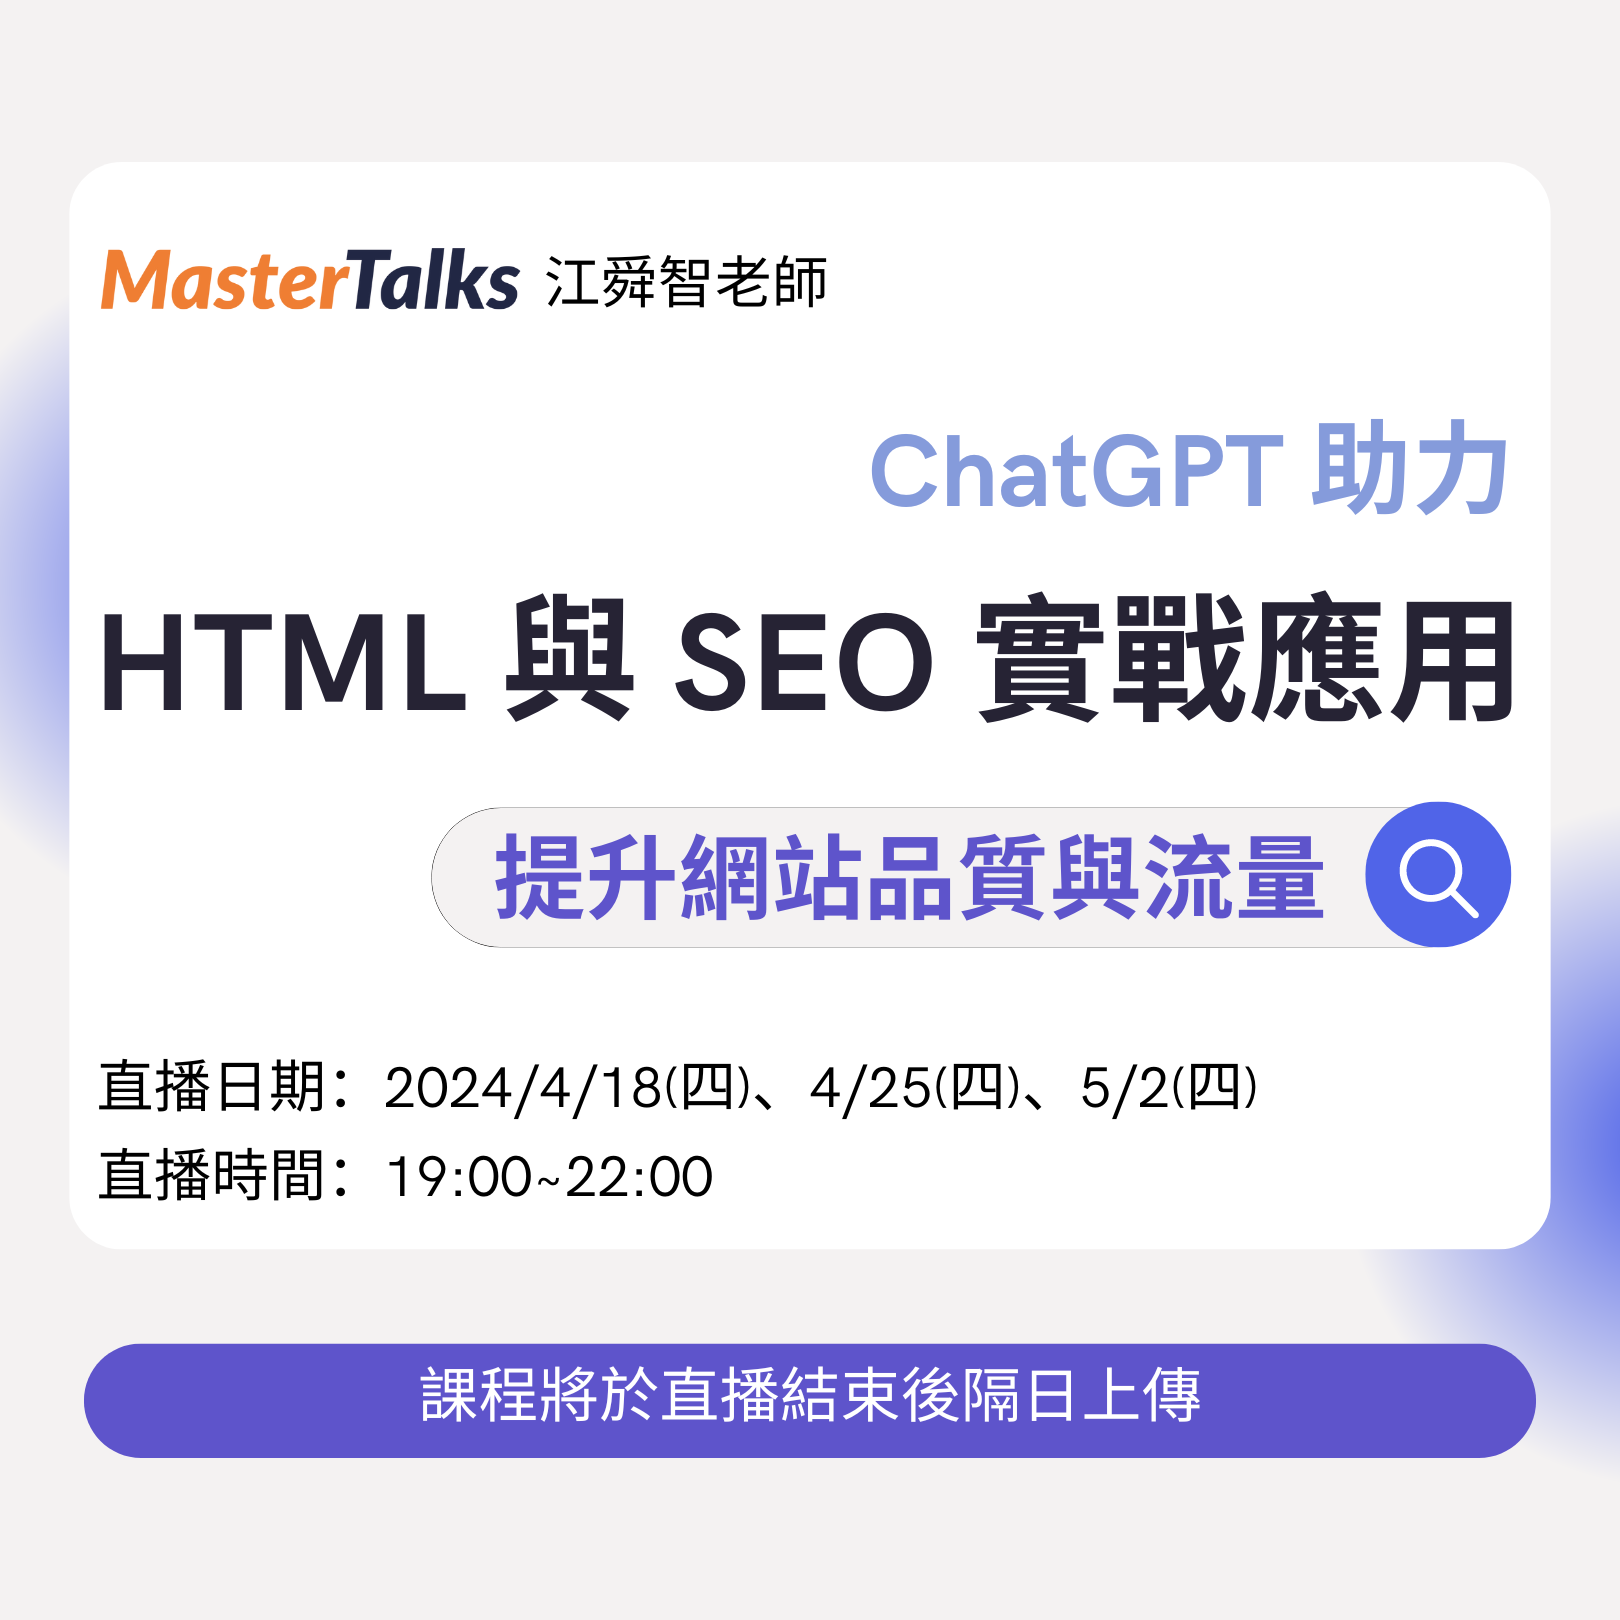 HTML與SEO實戰應用—並以ChatGPT助力提升網站品質與流量